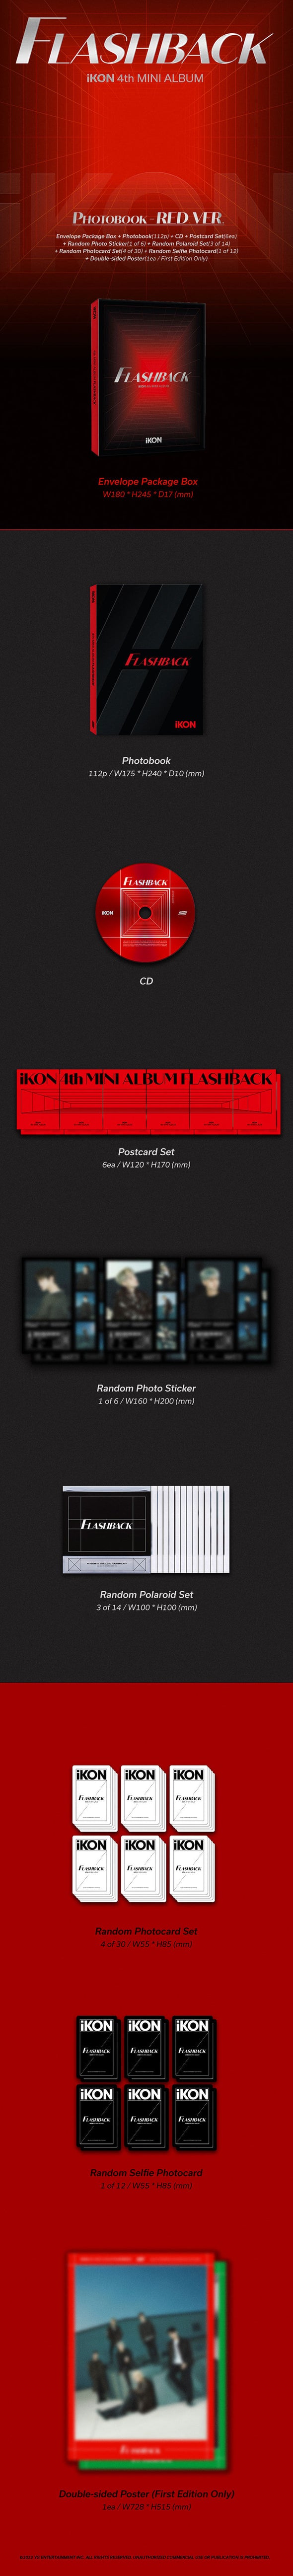 iKON - 4th Mini Album 'Flashback' (Photobook)